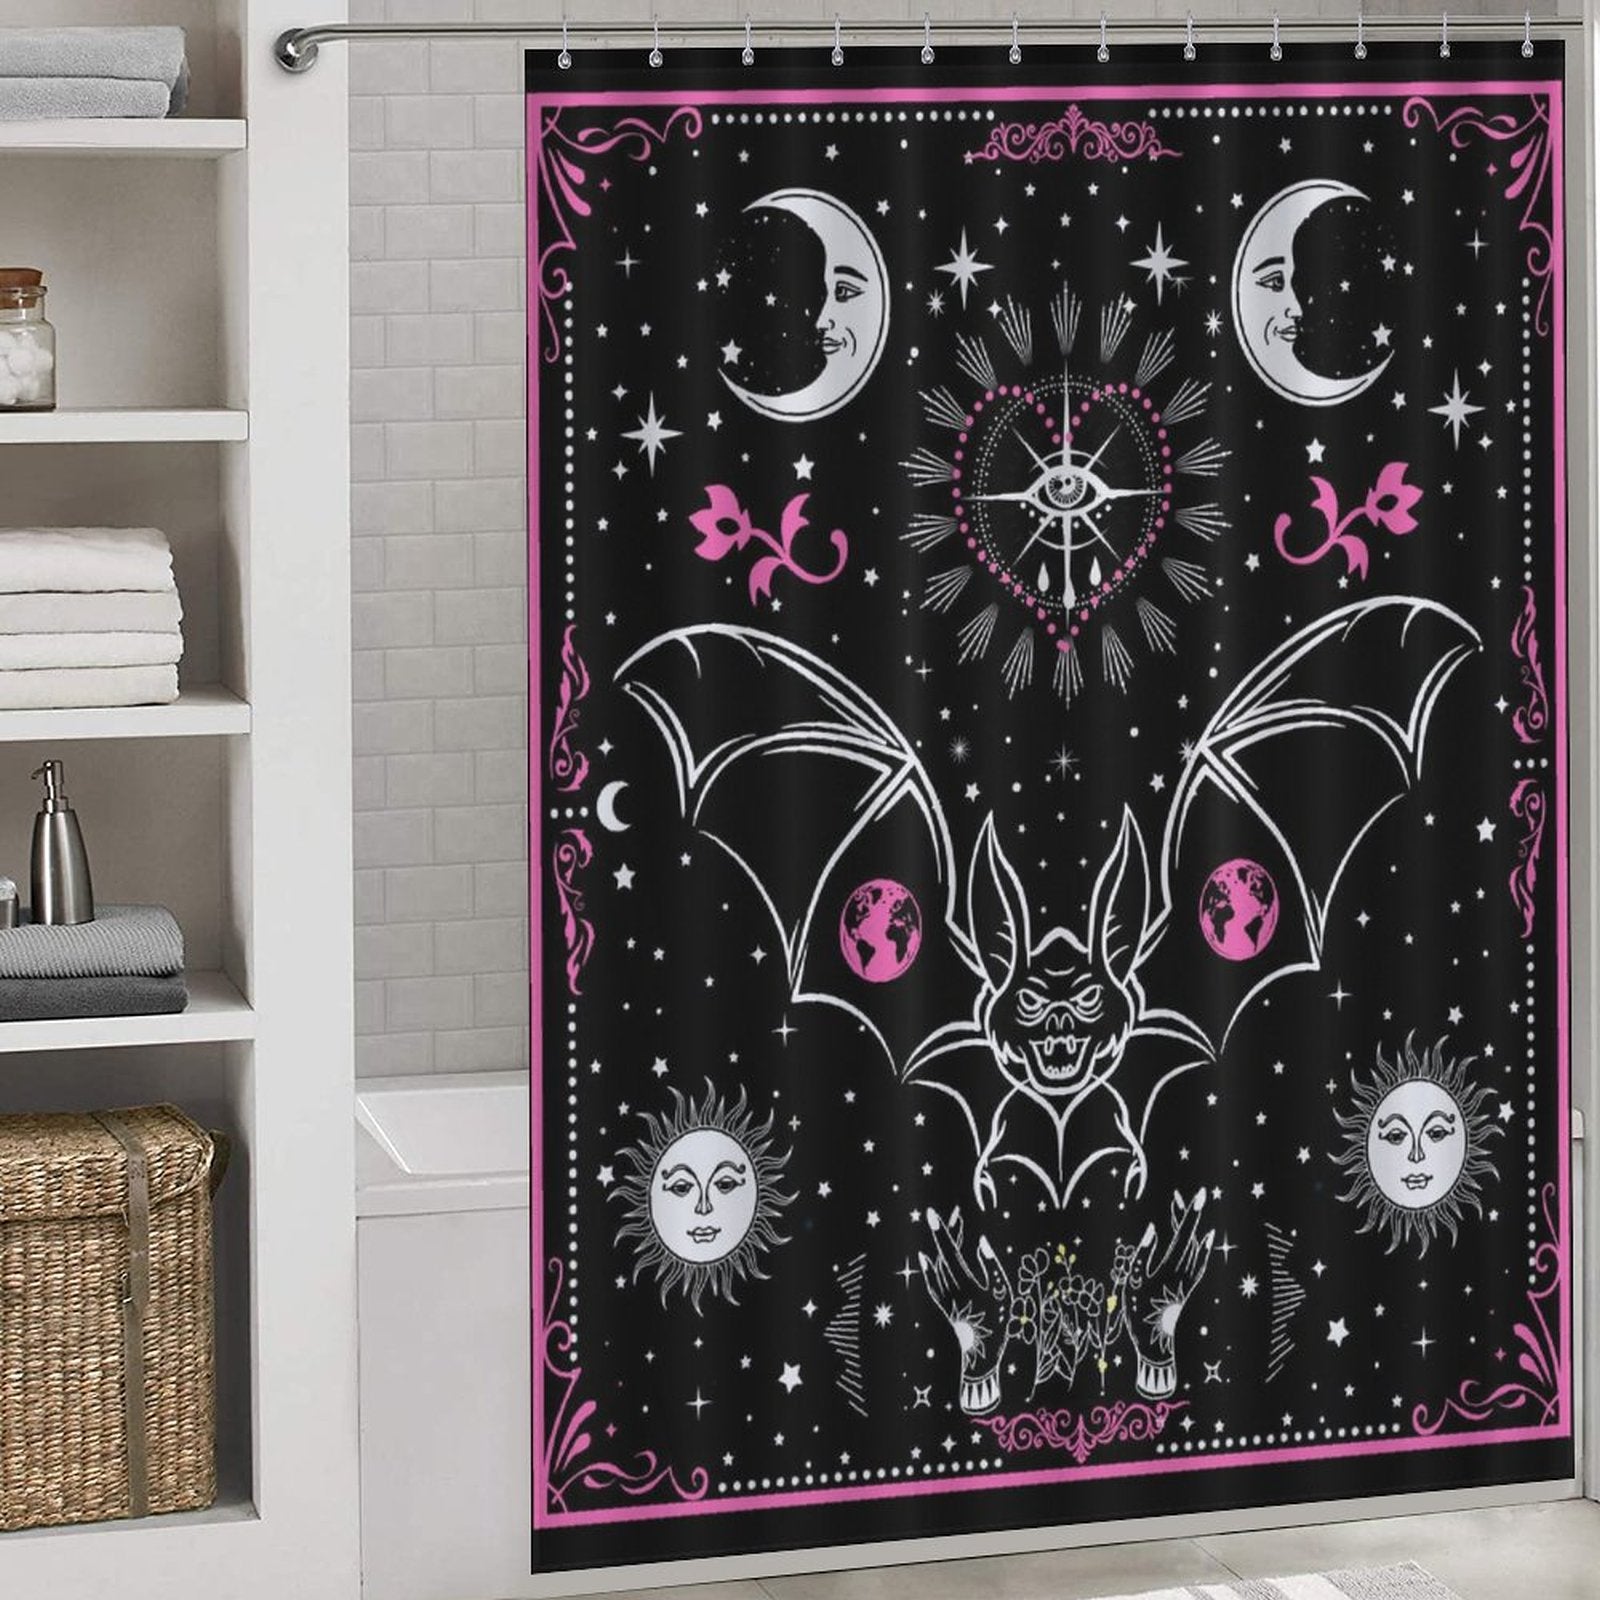 A Tarot Bat Shower Curtain with a tarot card design featuring bats and moons by Cotton Cat.